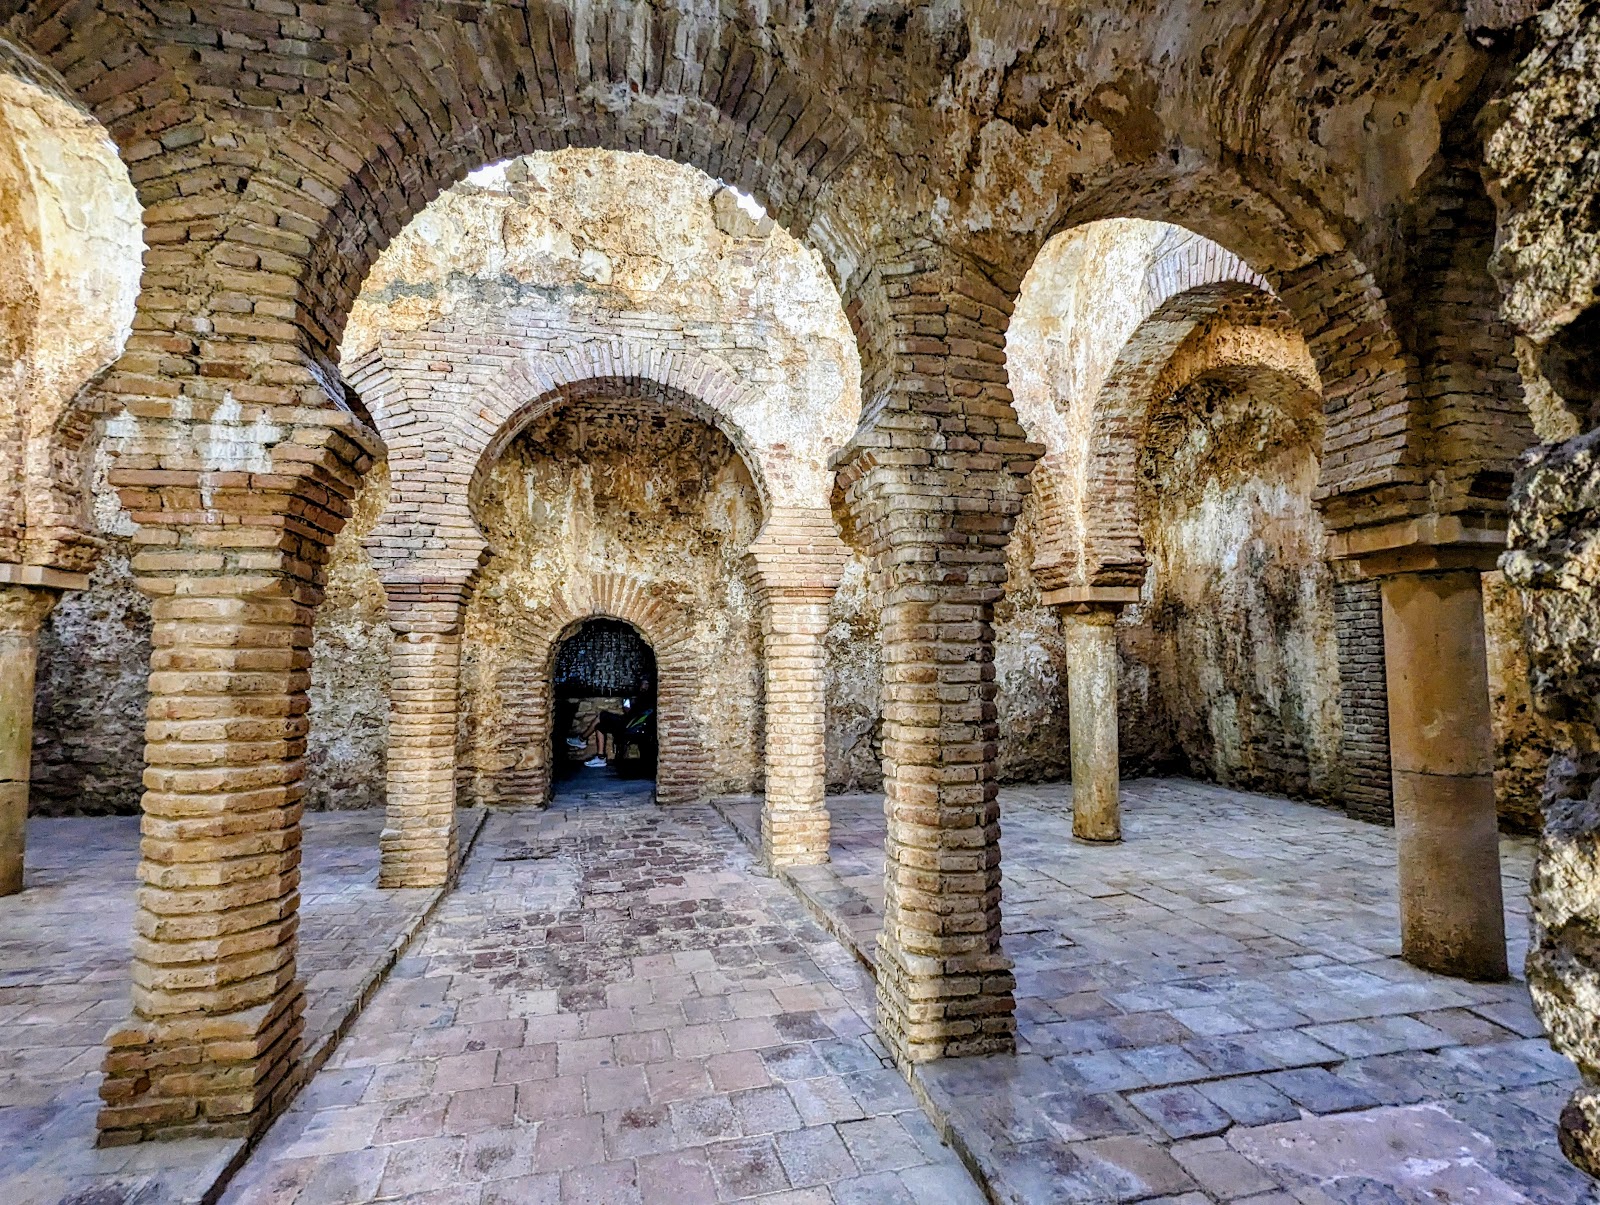 Arab Baths Archaeological Site